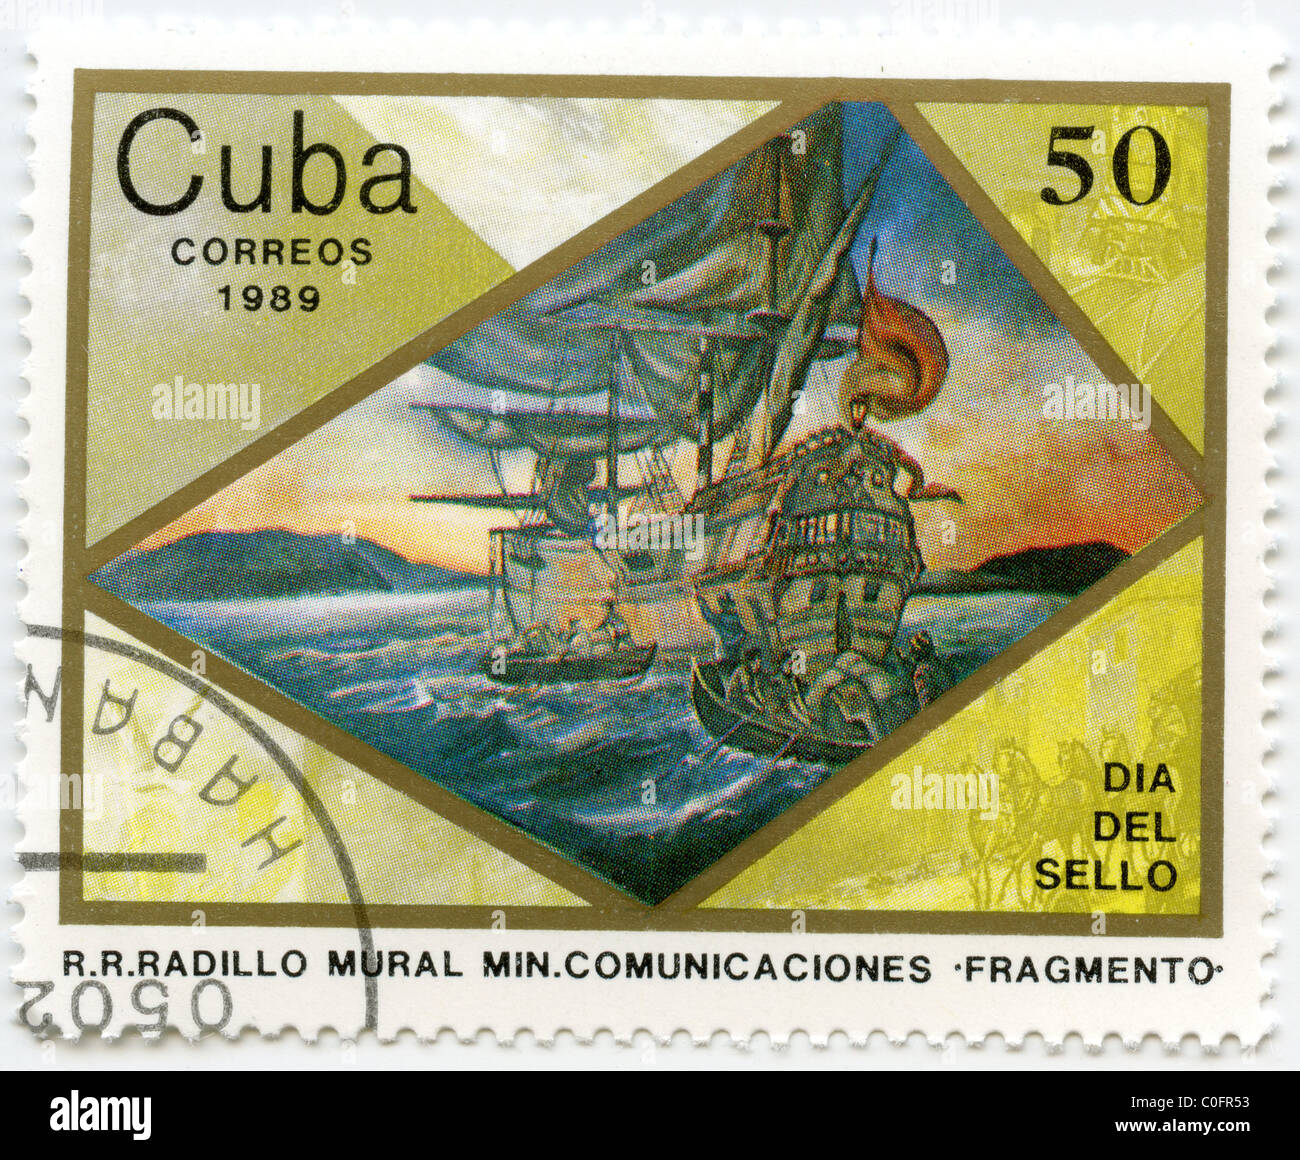 Old vintage Cuban postal stamps Stock Photo - Alamy